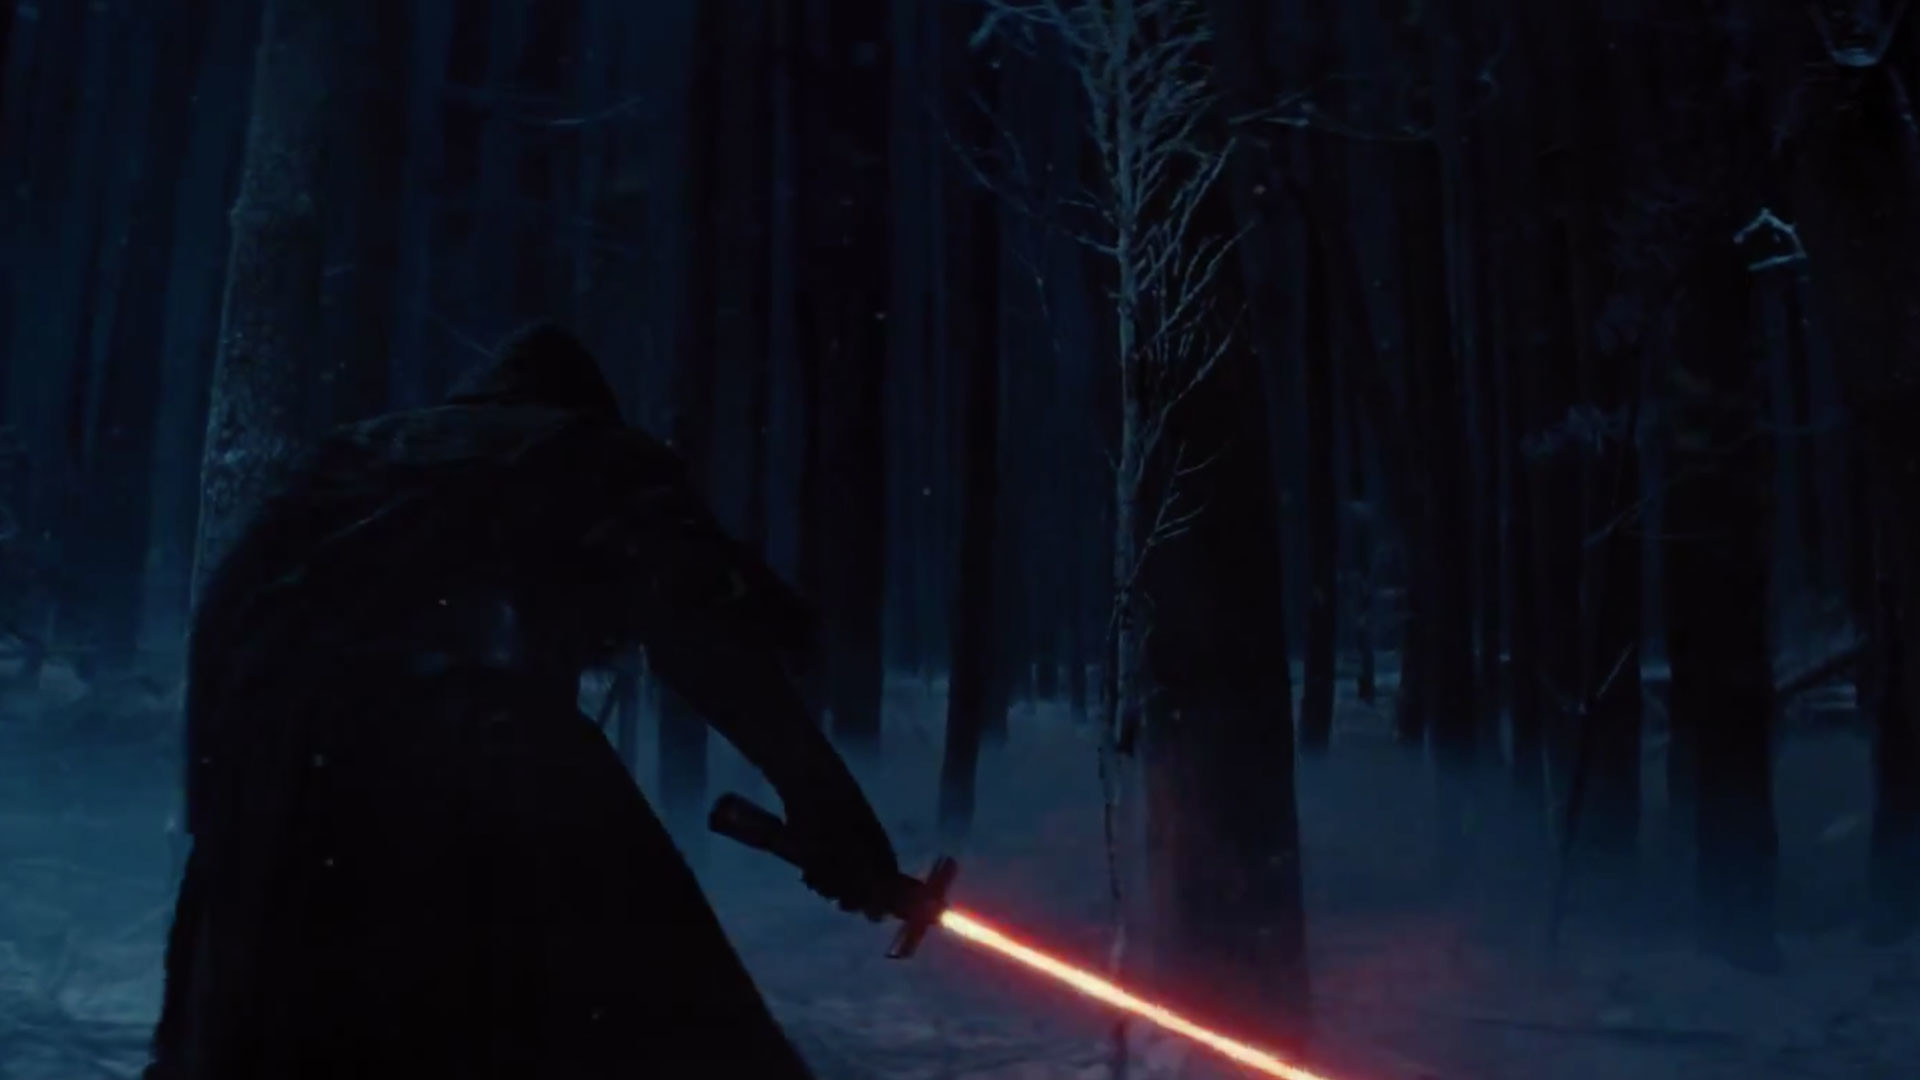 1920x1080 Star Wars: The Force Awakens HD images released by Disney - SlashGear